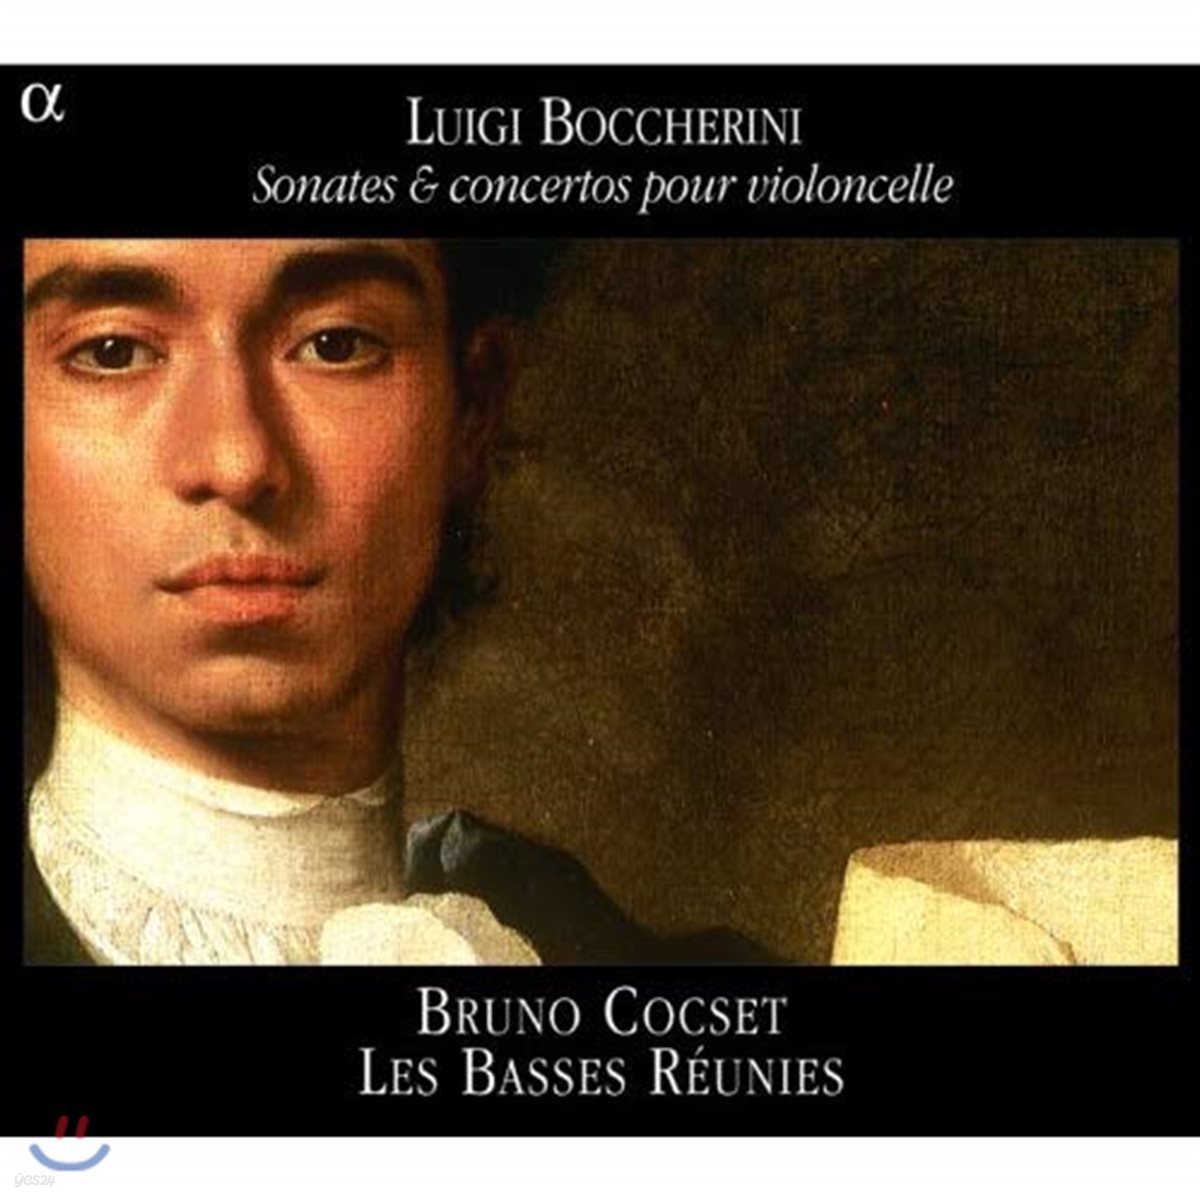 Bruno Cocset 보케리니: 첼로 소나타와 협주곡 (Luigi Boccherini: Sonates & concertos pour violoncelle)